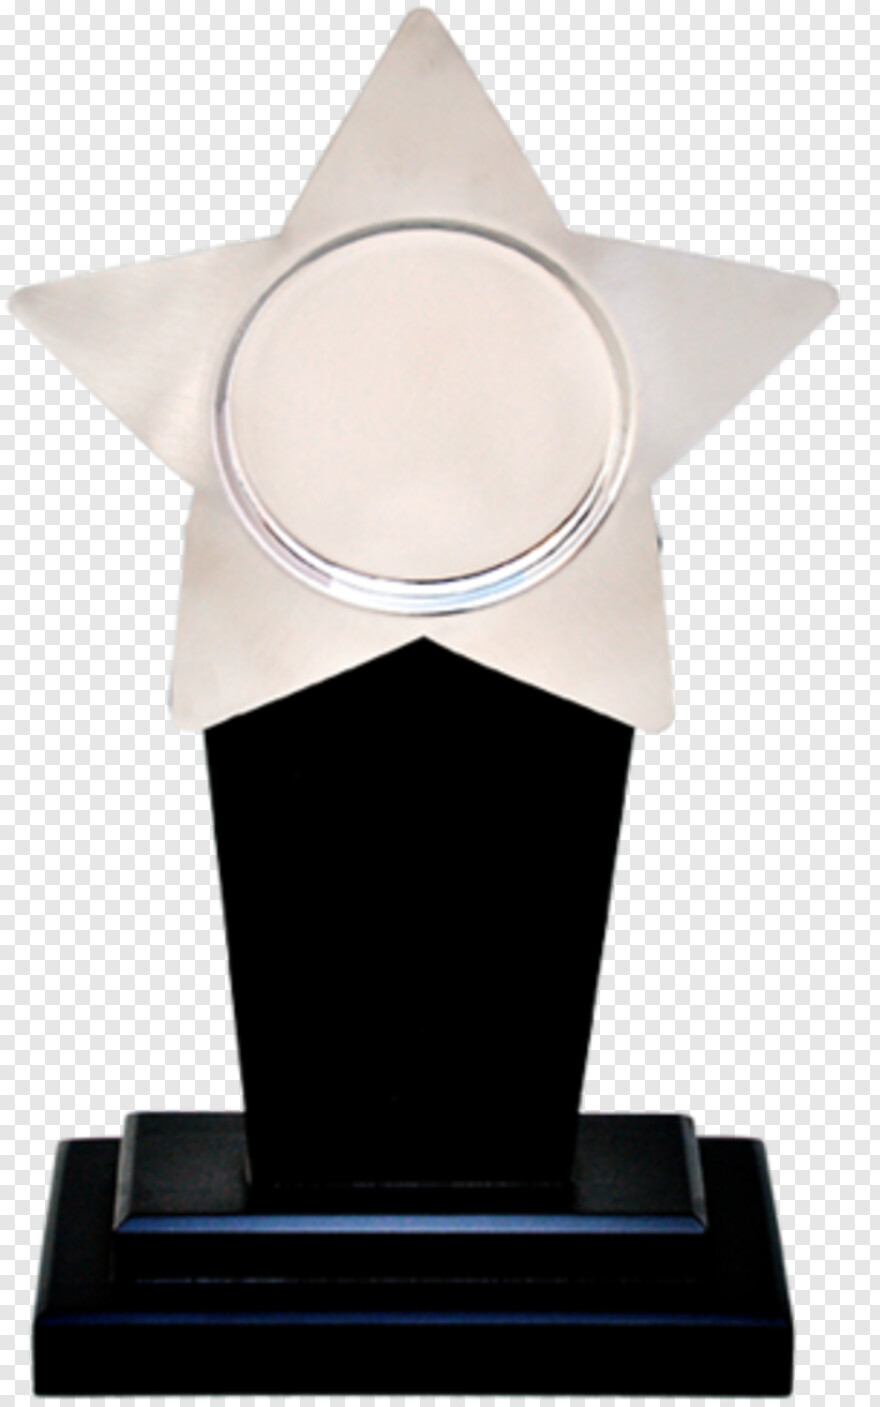  Star Shape, Silver Trophy, World Series Trophy, Lombardi Trophy, Super Bowl Trophy, Nba Trophy